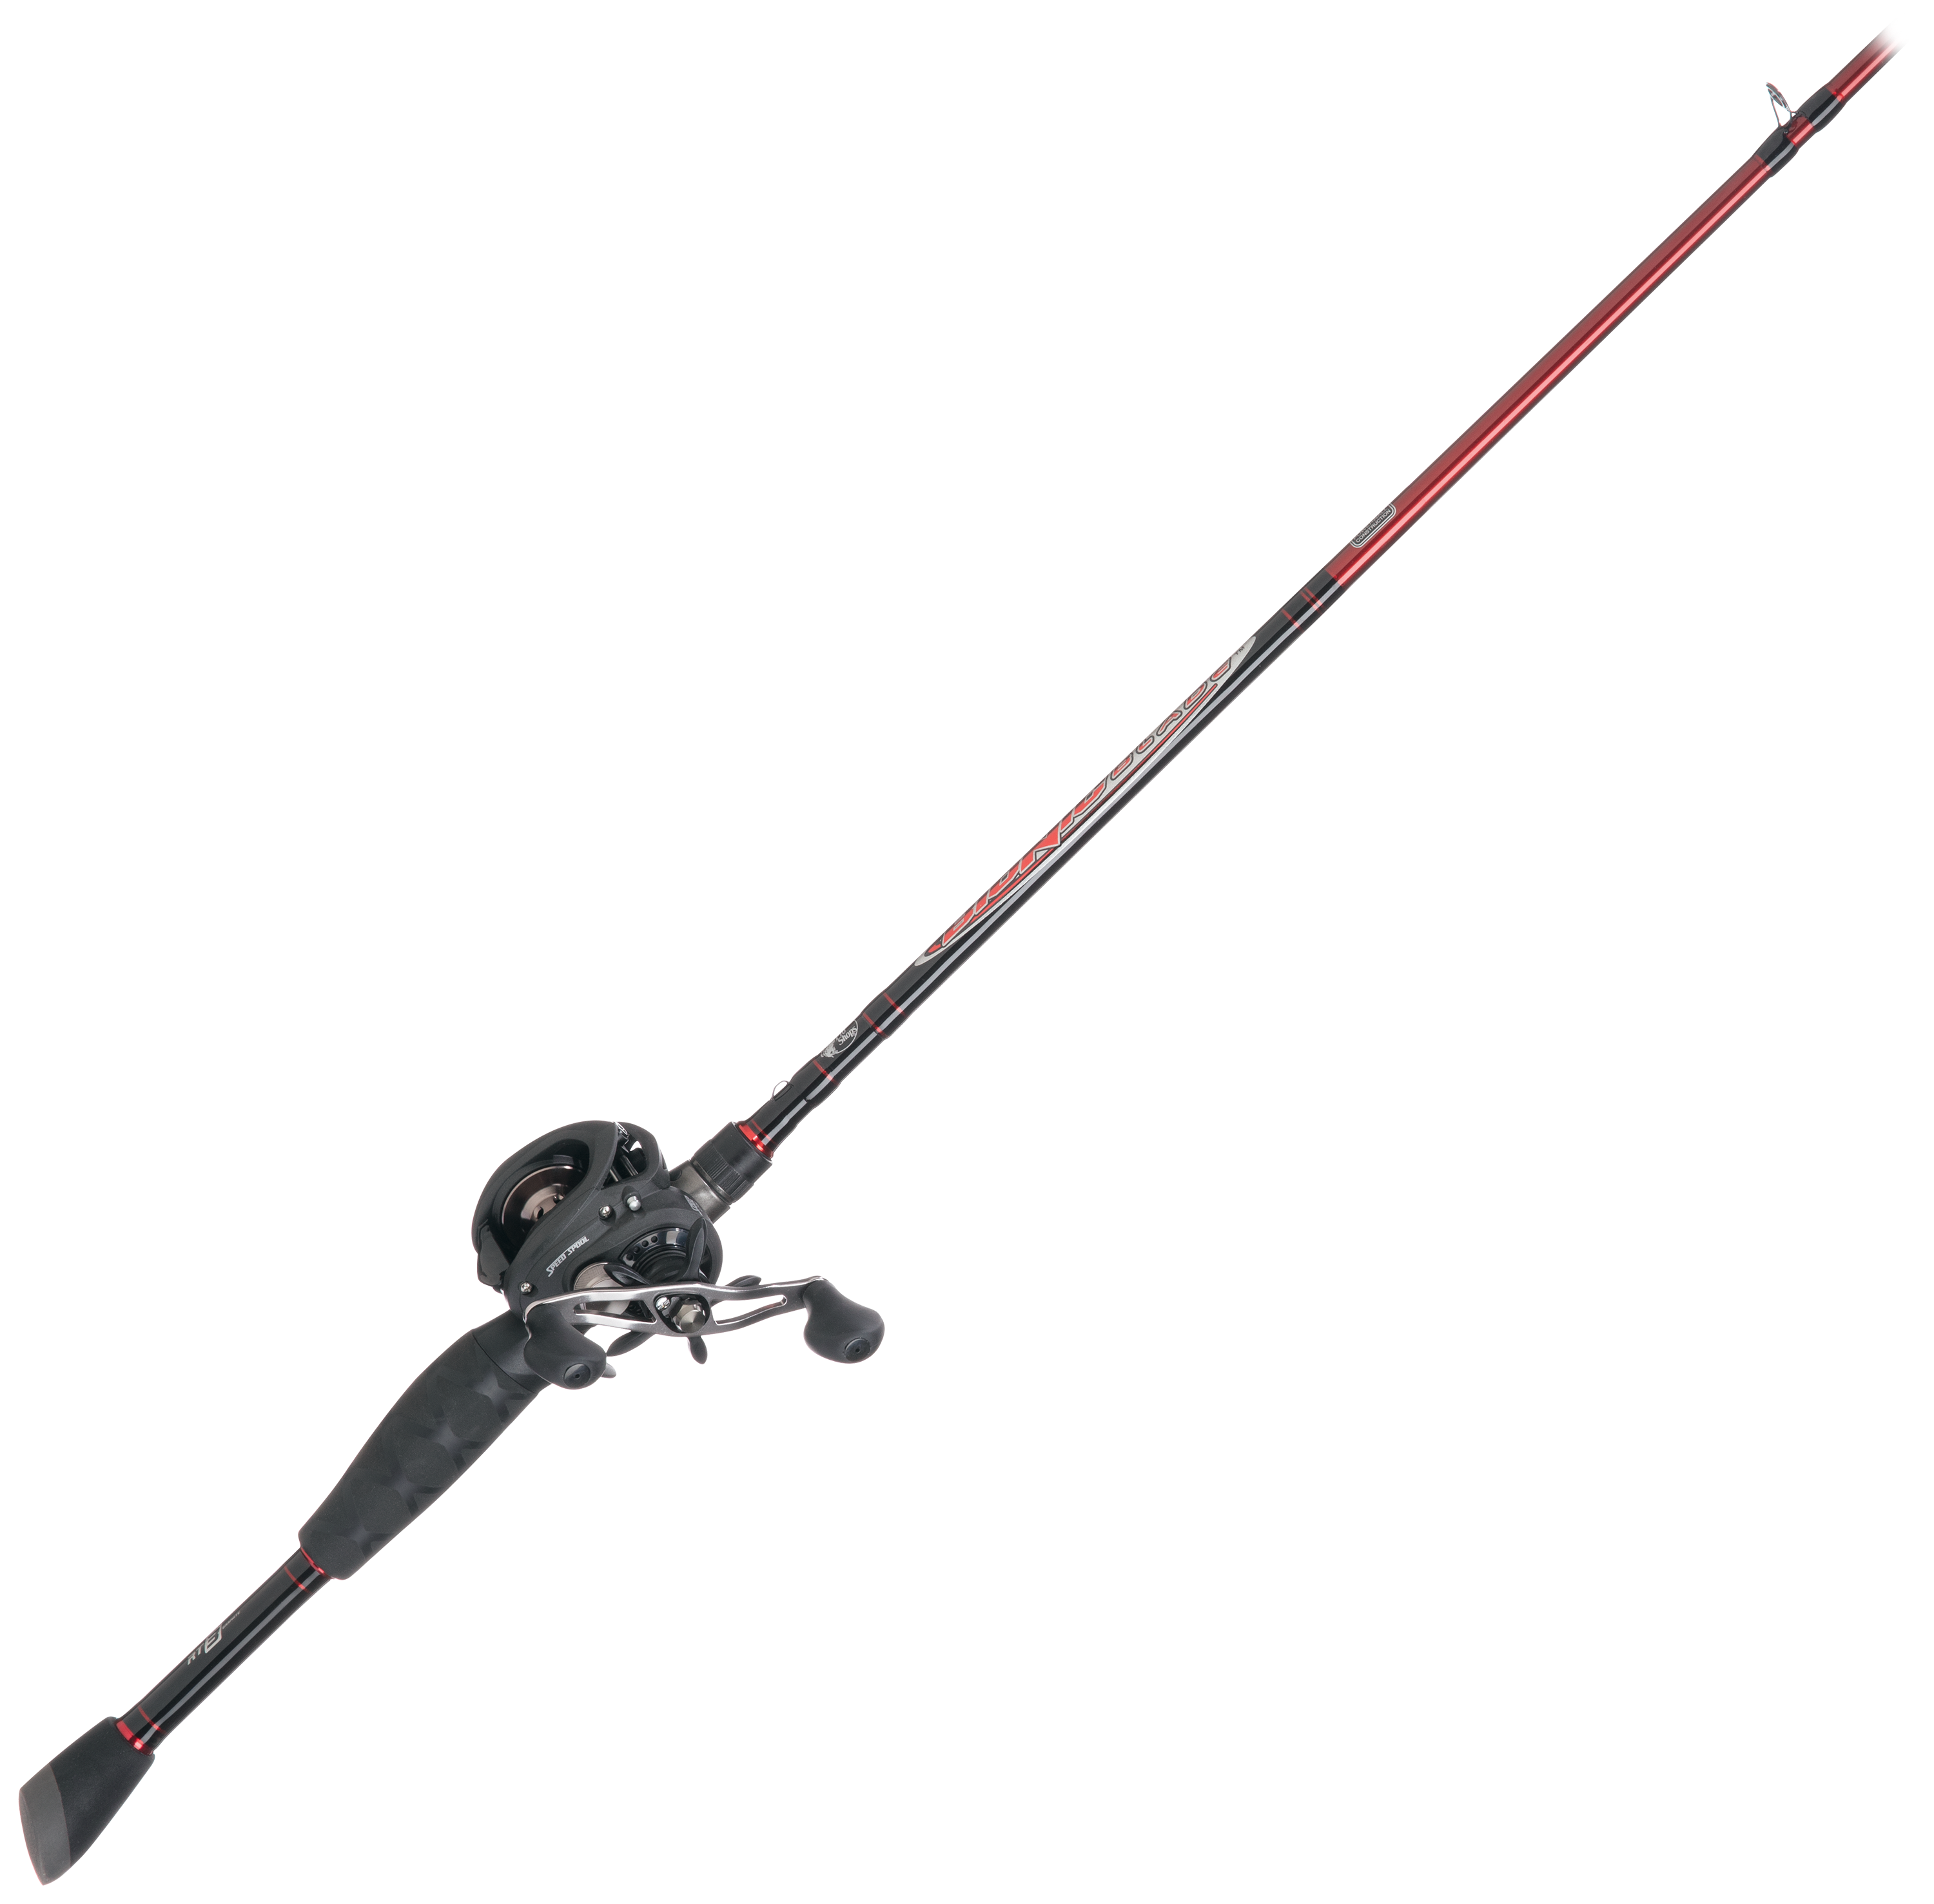 Lew's Speed Spool LFS/Bass Pro Shops XPS Bionic Blade Casting Rod and Reel Combo - Left - 6'9 - Medium Heavy - 7.5:1